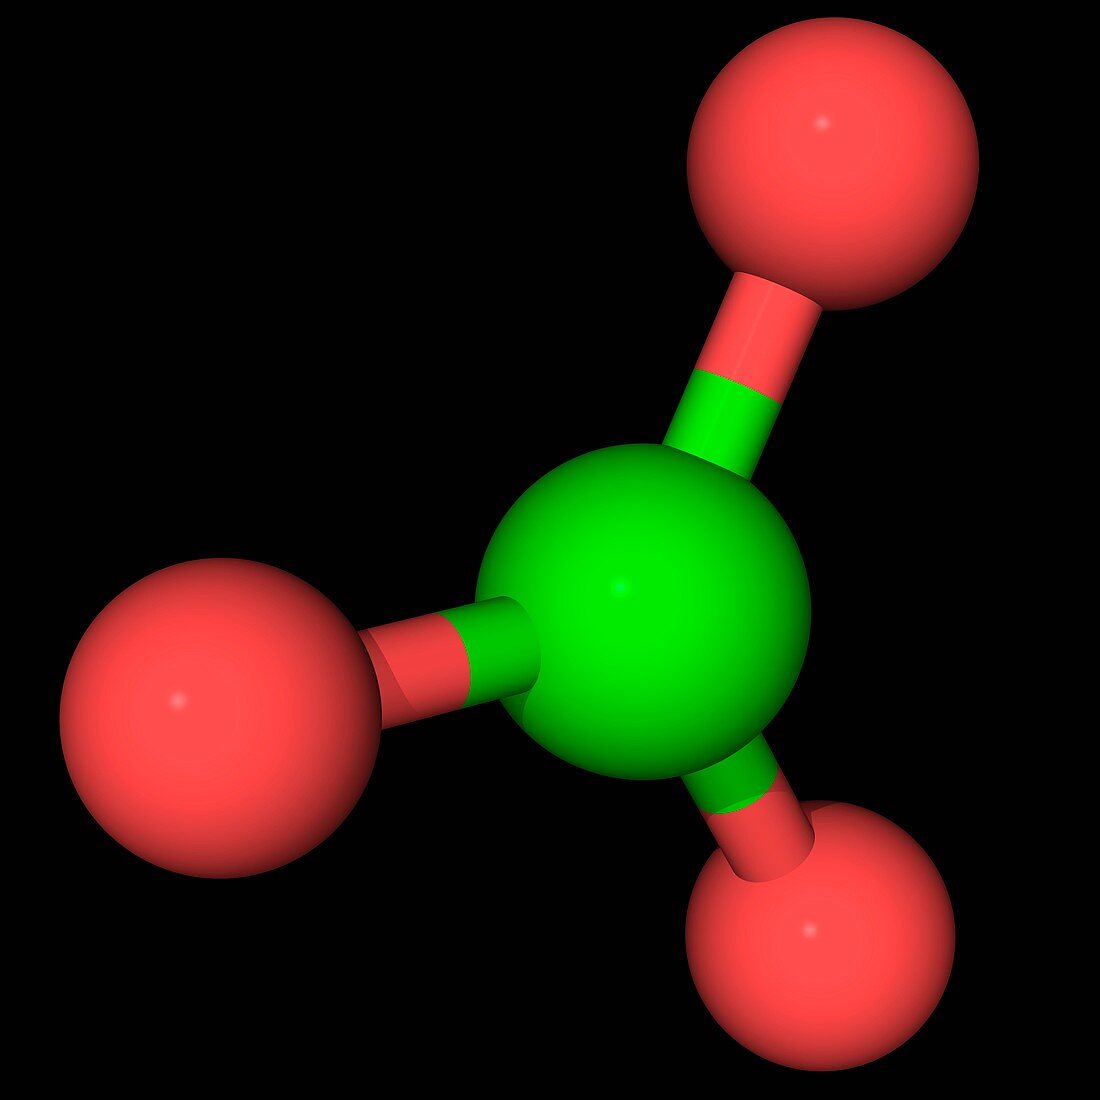 Chlorate ion molecule